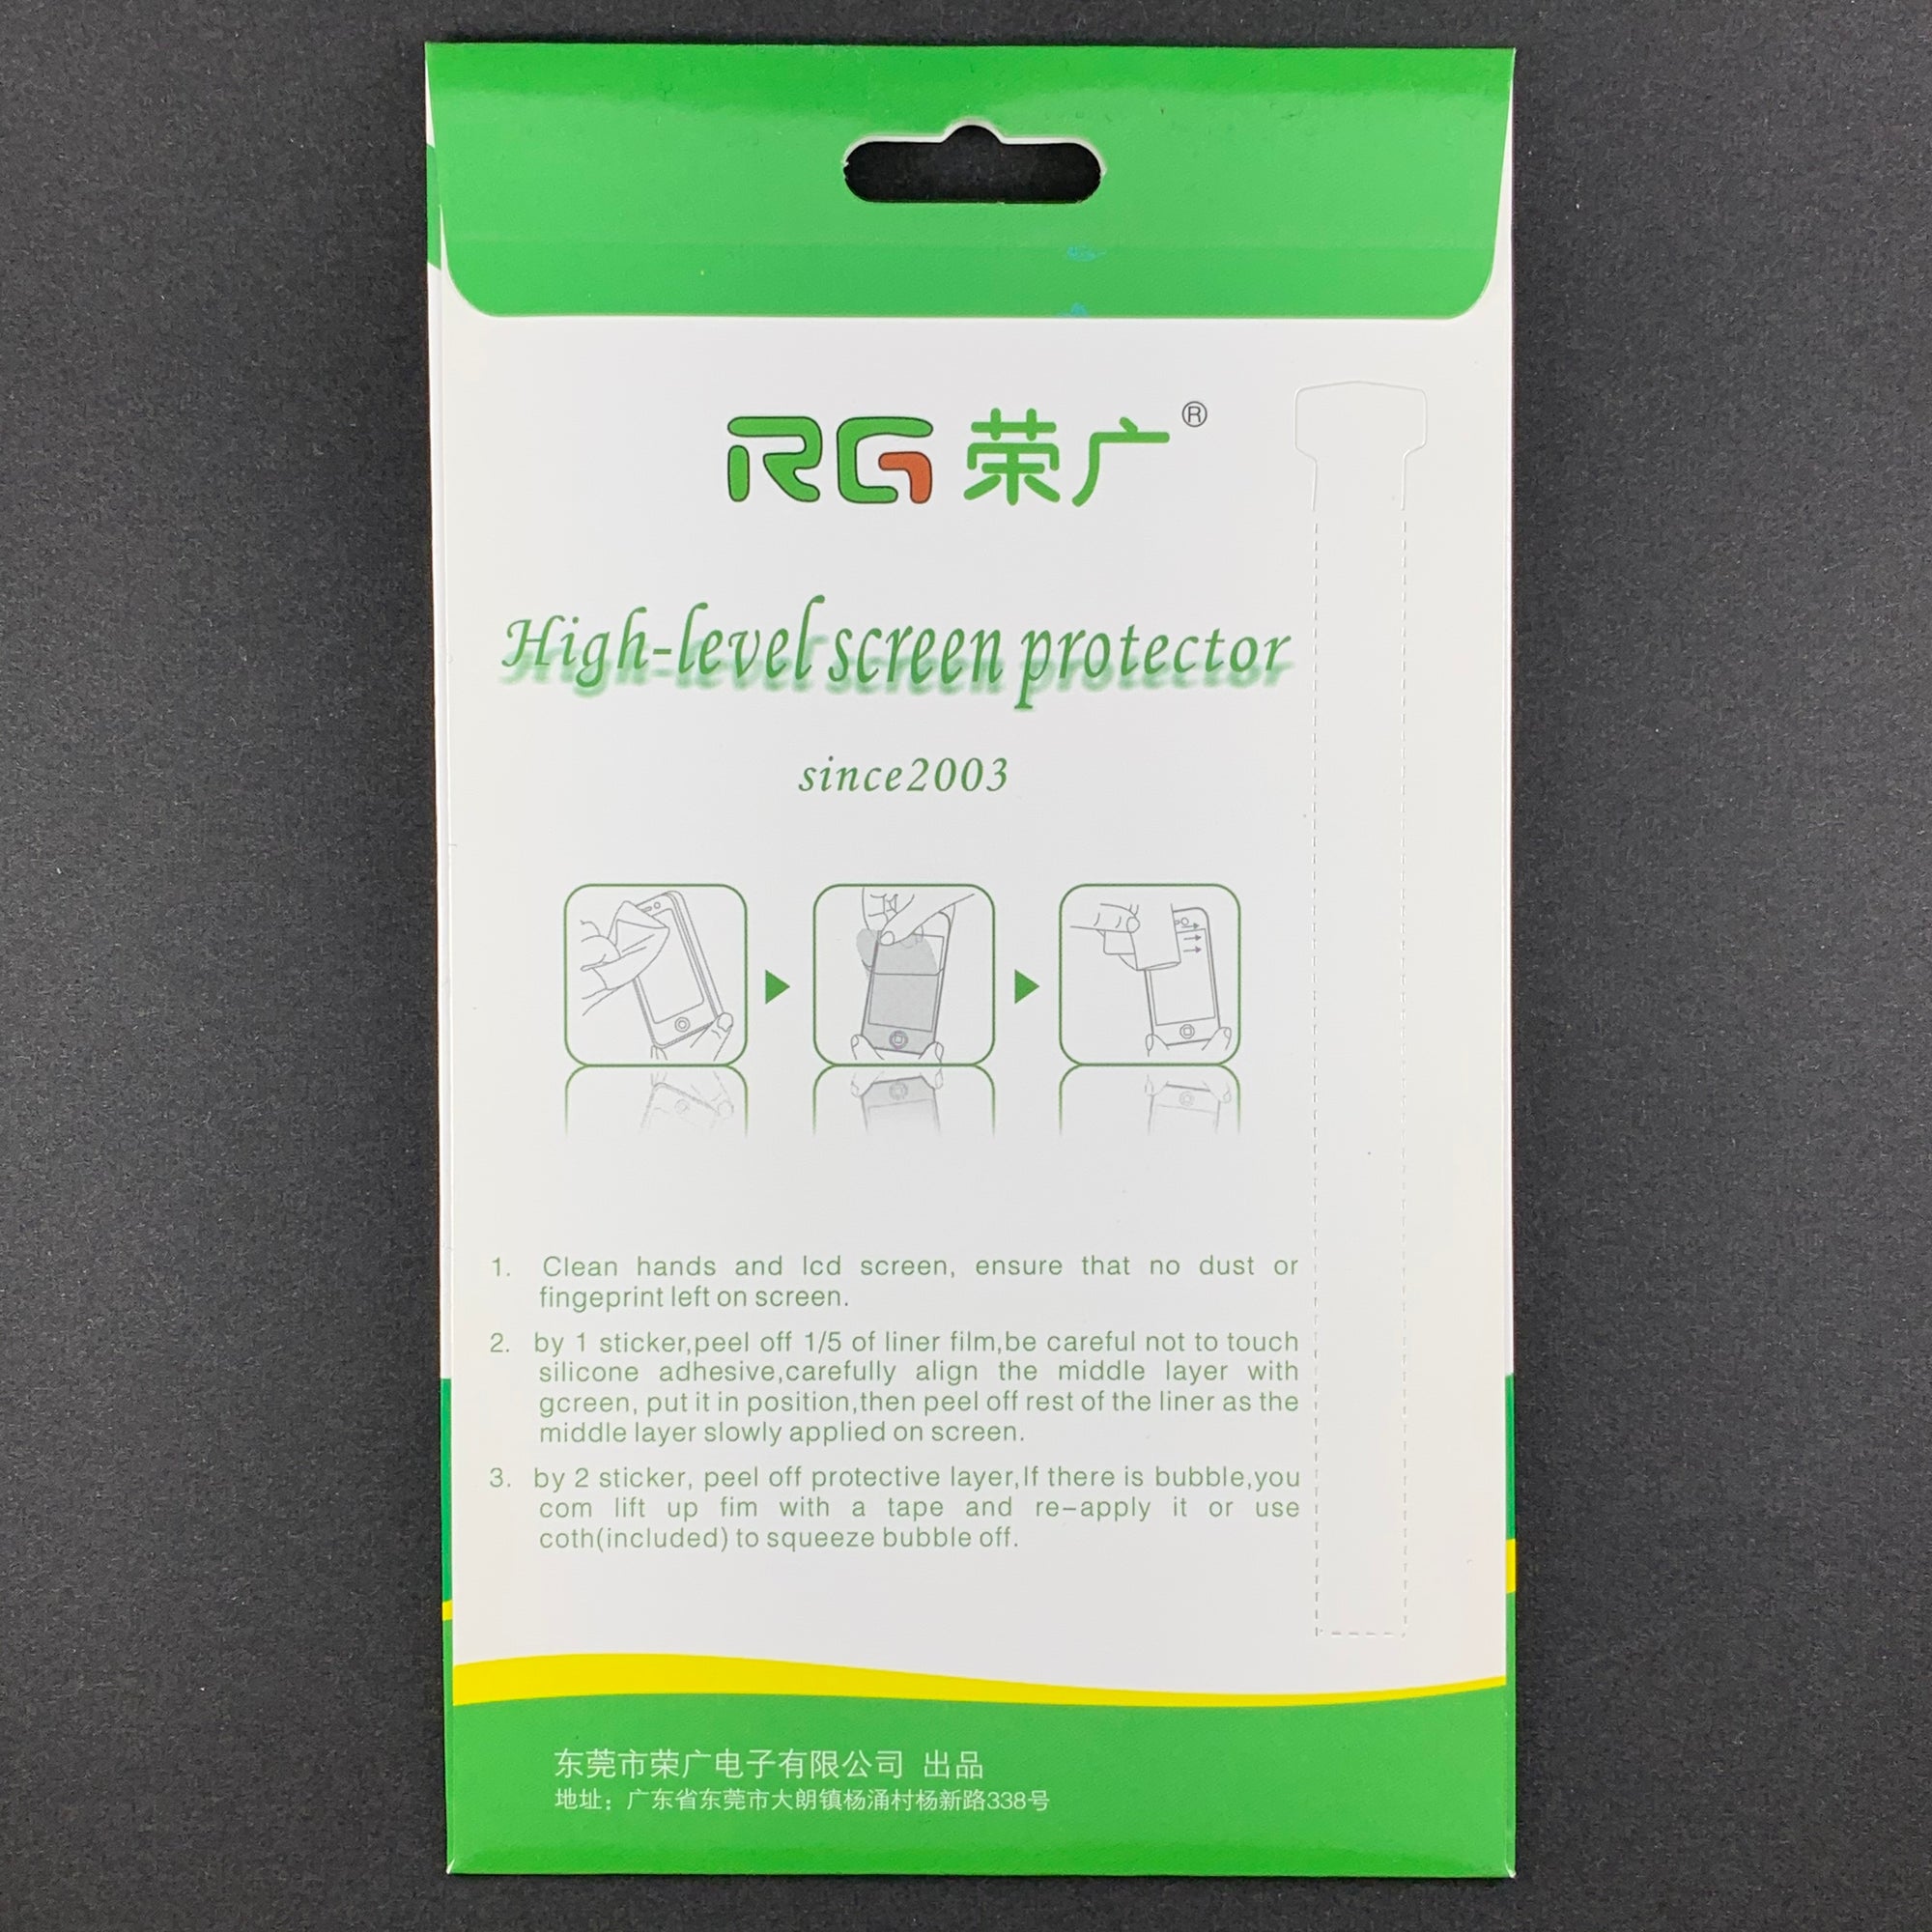 Protecteur d'écran RG Professional Soft Film pour iPad Air / Air 2 / Pro 9.7 5th / 6th (CLEAR, 2-PACK)